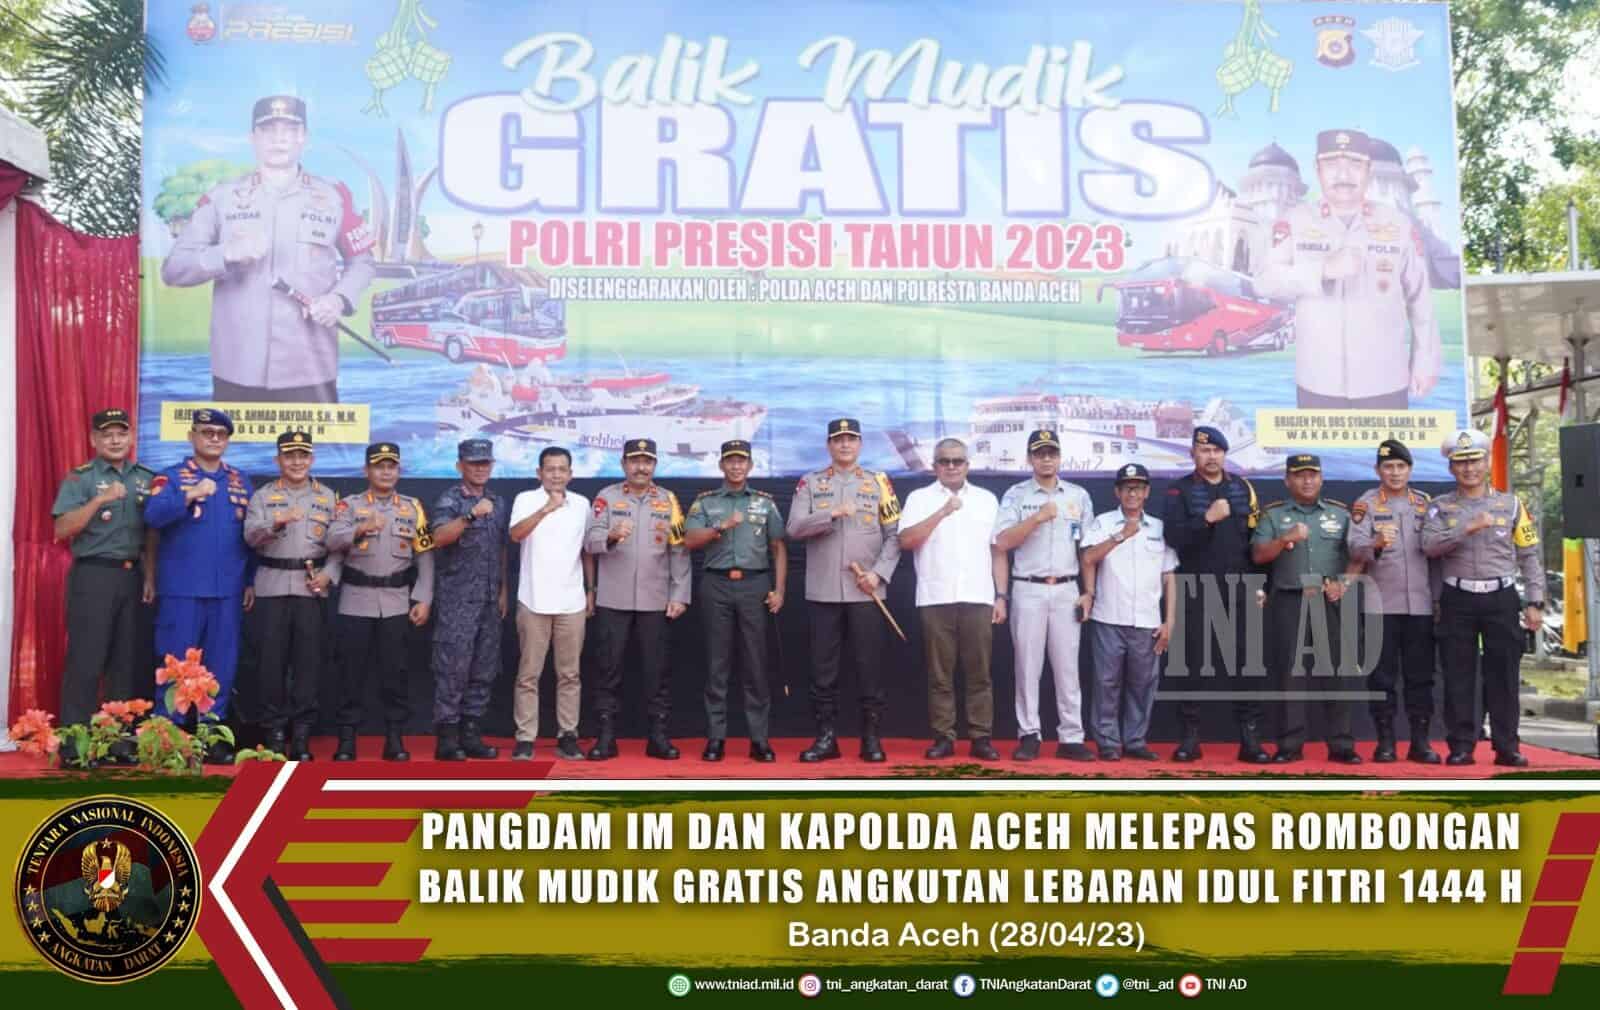 Penuh Keakraban, Pangdam IM dan Kapolda Aceh Melepas Rombongan Balik Mudik Gratis Angkutan Lebaran Idul Fitri 1444 H